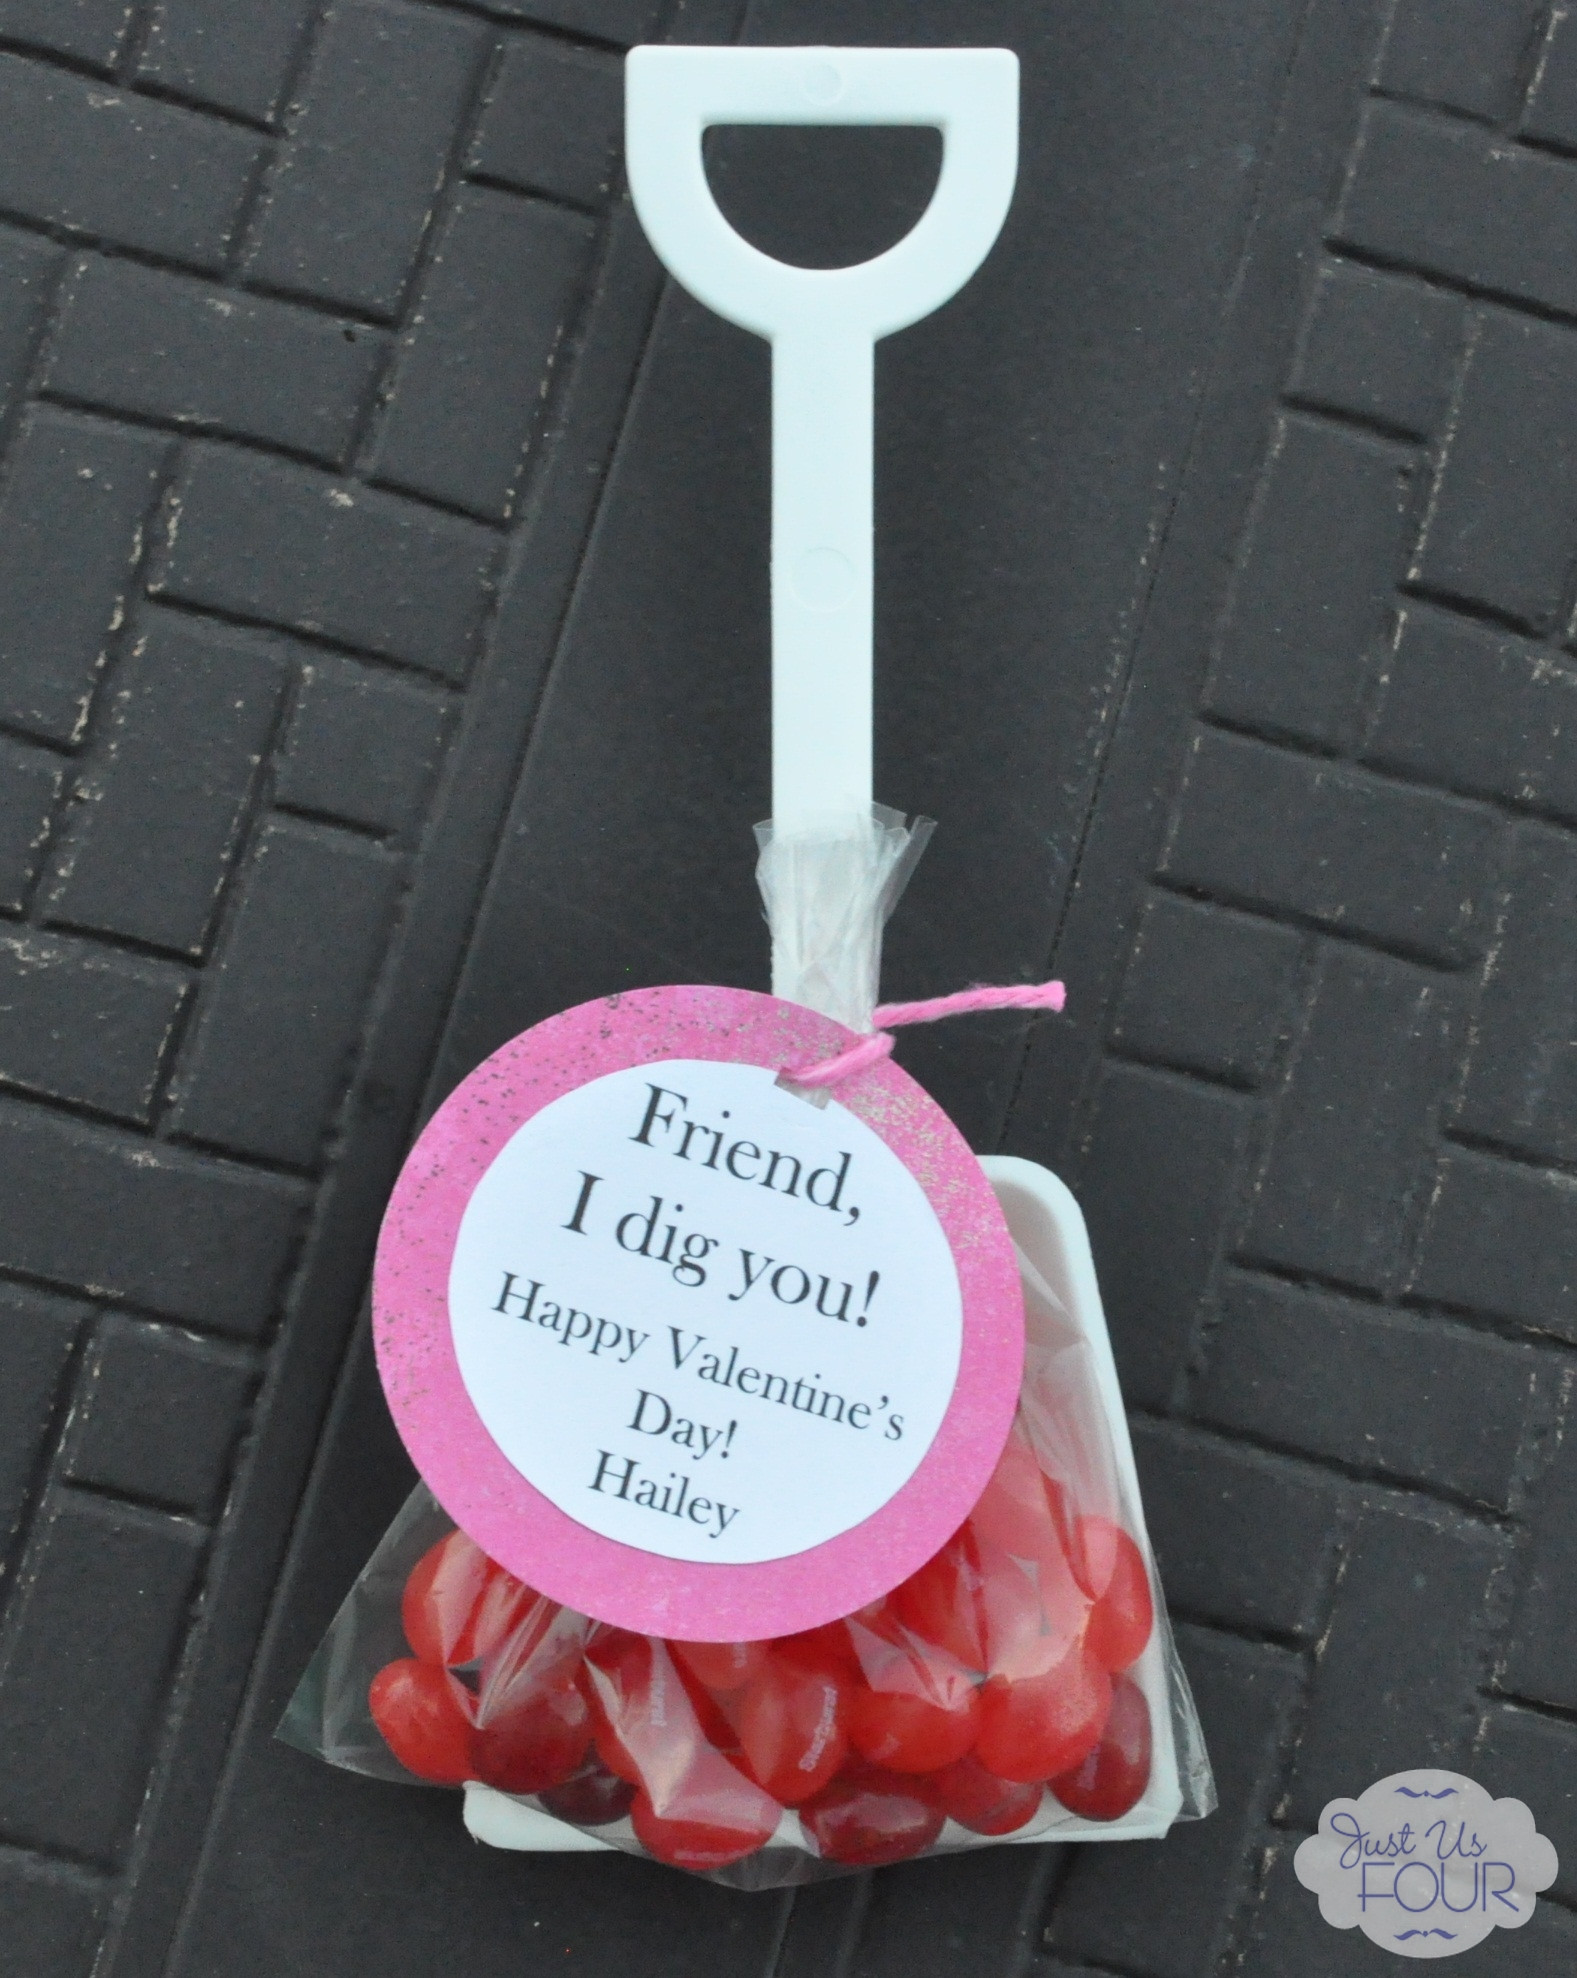 Preschool Valentine Gift Ideas
 "I Dig You" Valentines for Kids My Suburban Kitchen